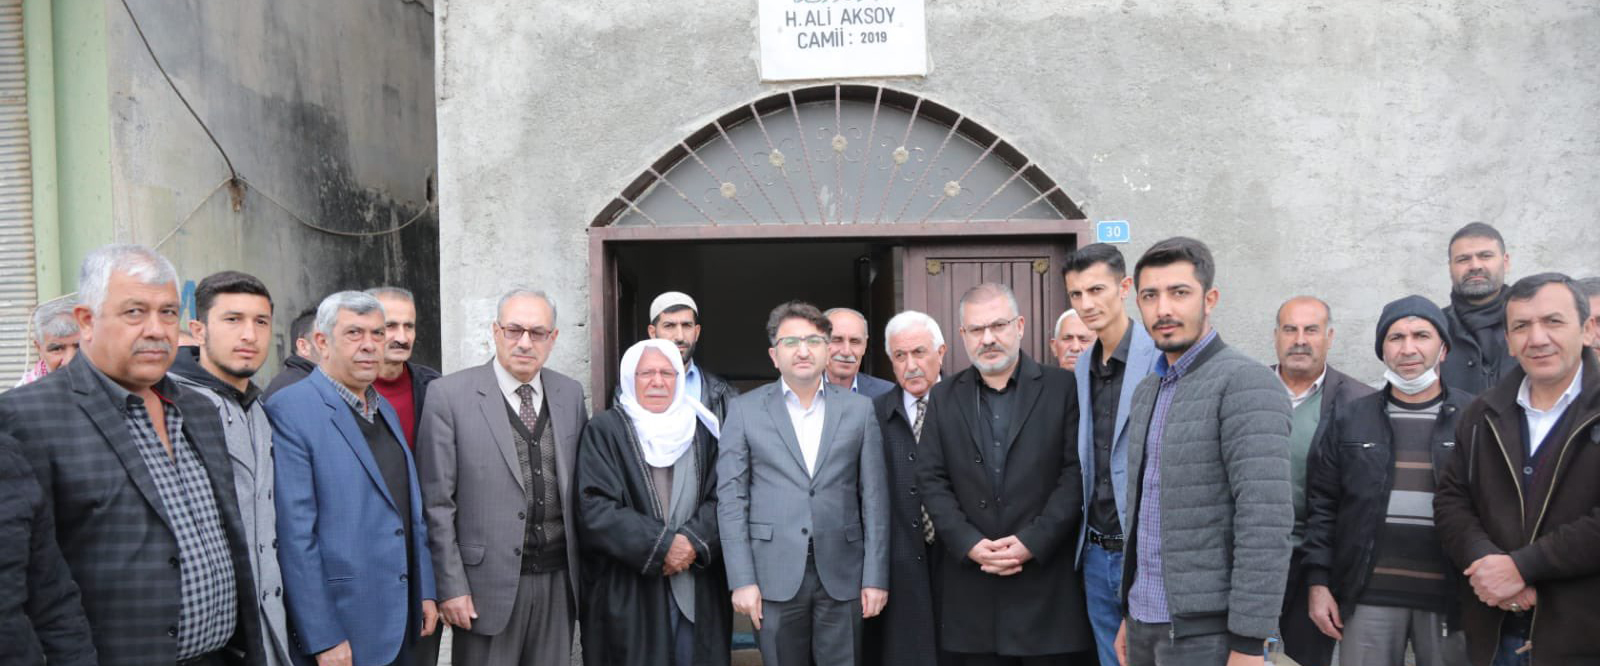 Hacı Ali Aksoy Camii ibadete açıldı